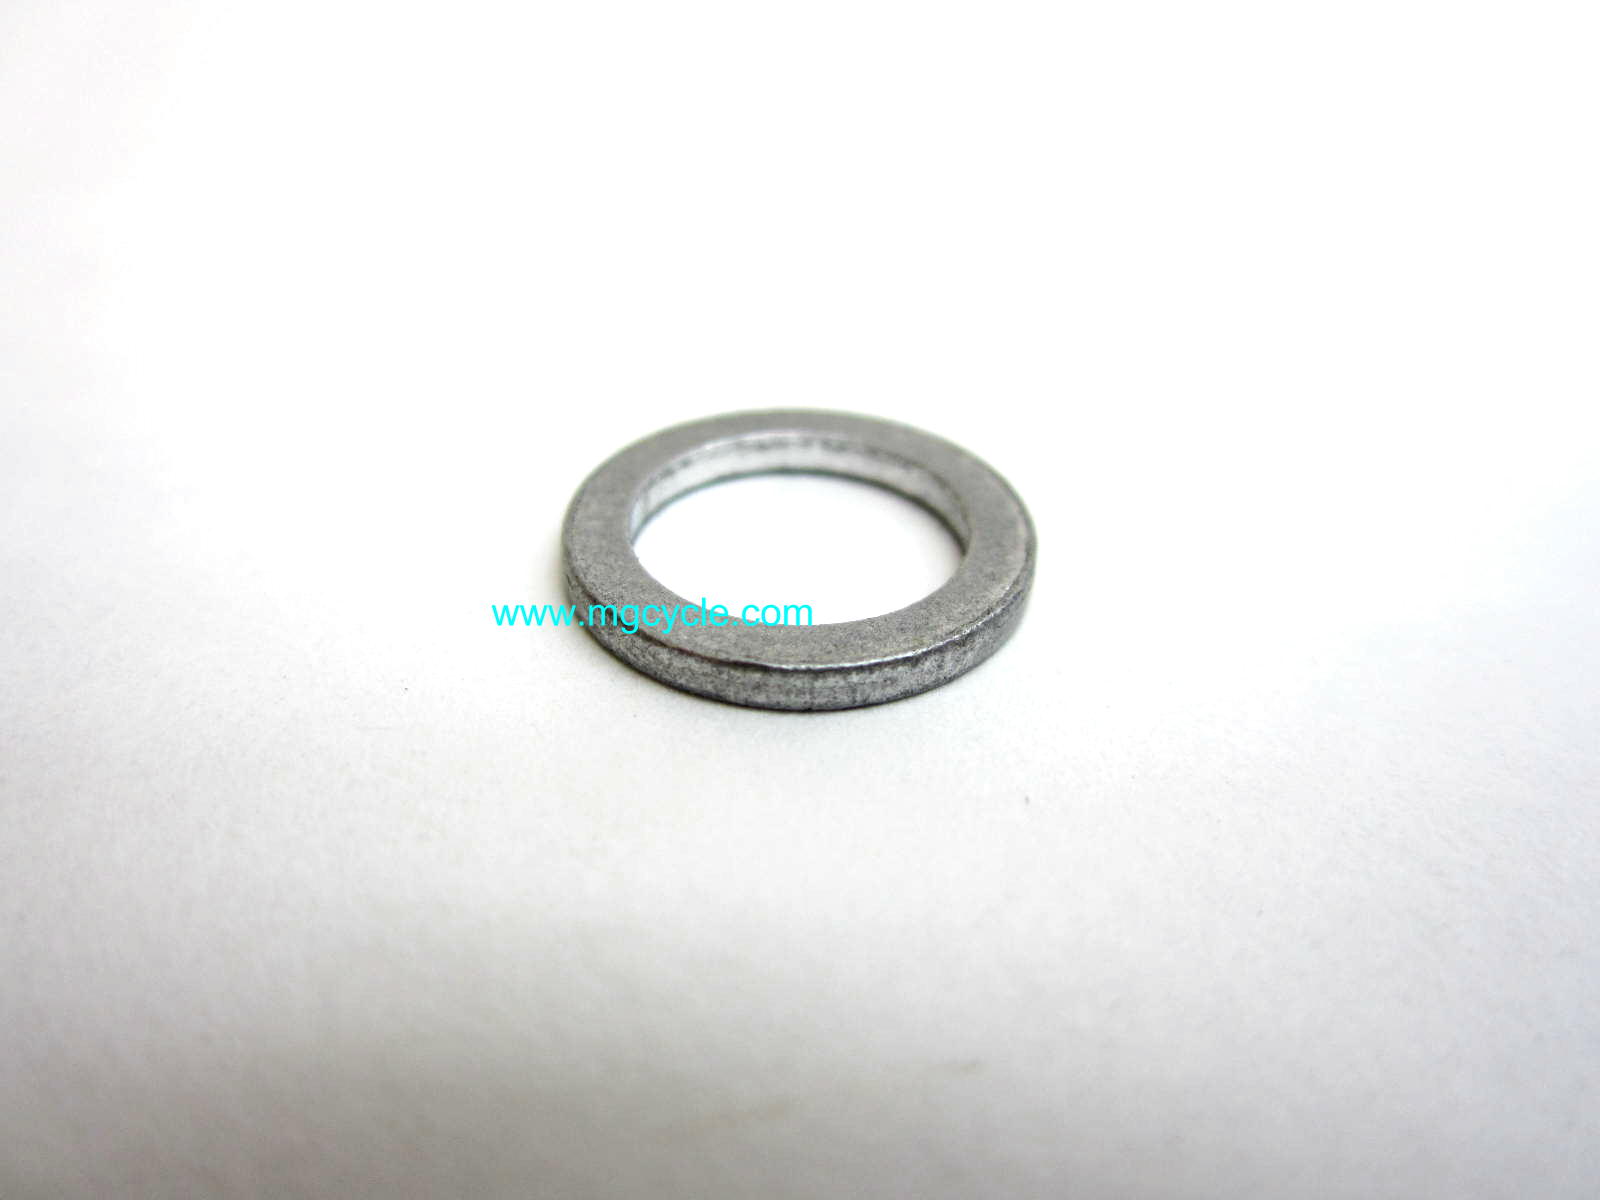 10mm aluminum seal washer, brake and oil lines, fork bottom bolt